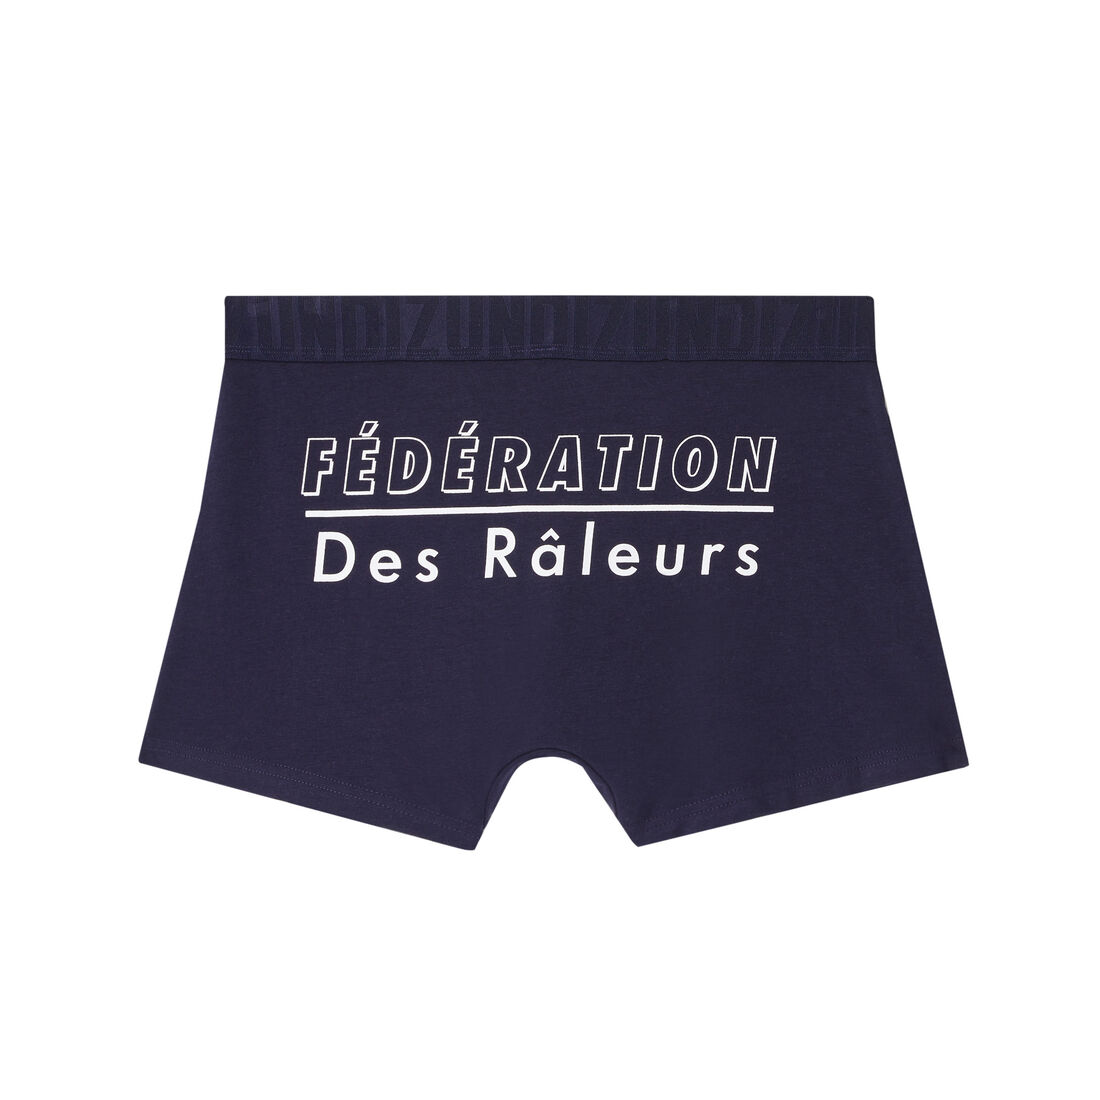 boxers with "fédération des râleurs" [association of whingers] text;